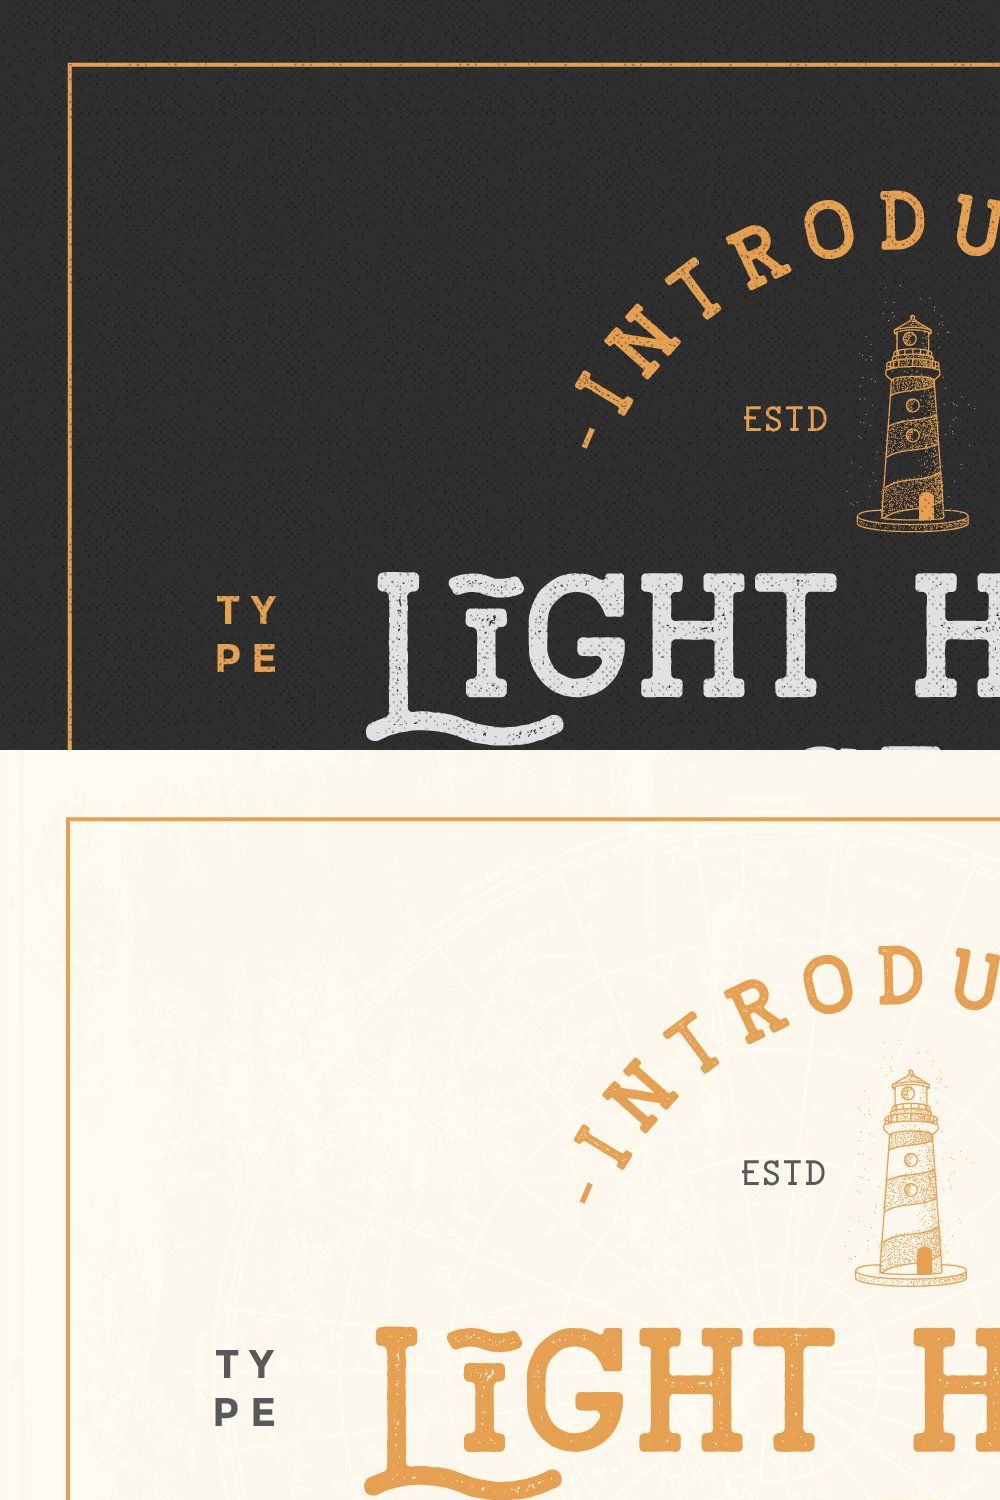 LightHouse - Sailor Rough Typeface pinterest preview image.